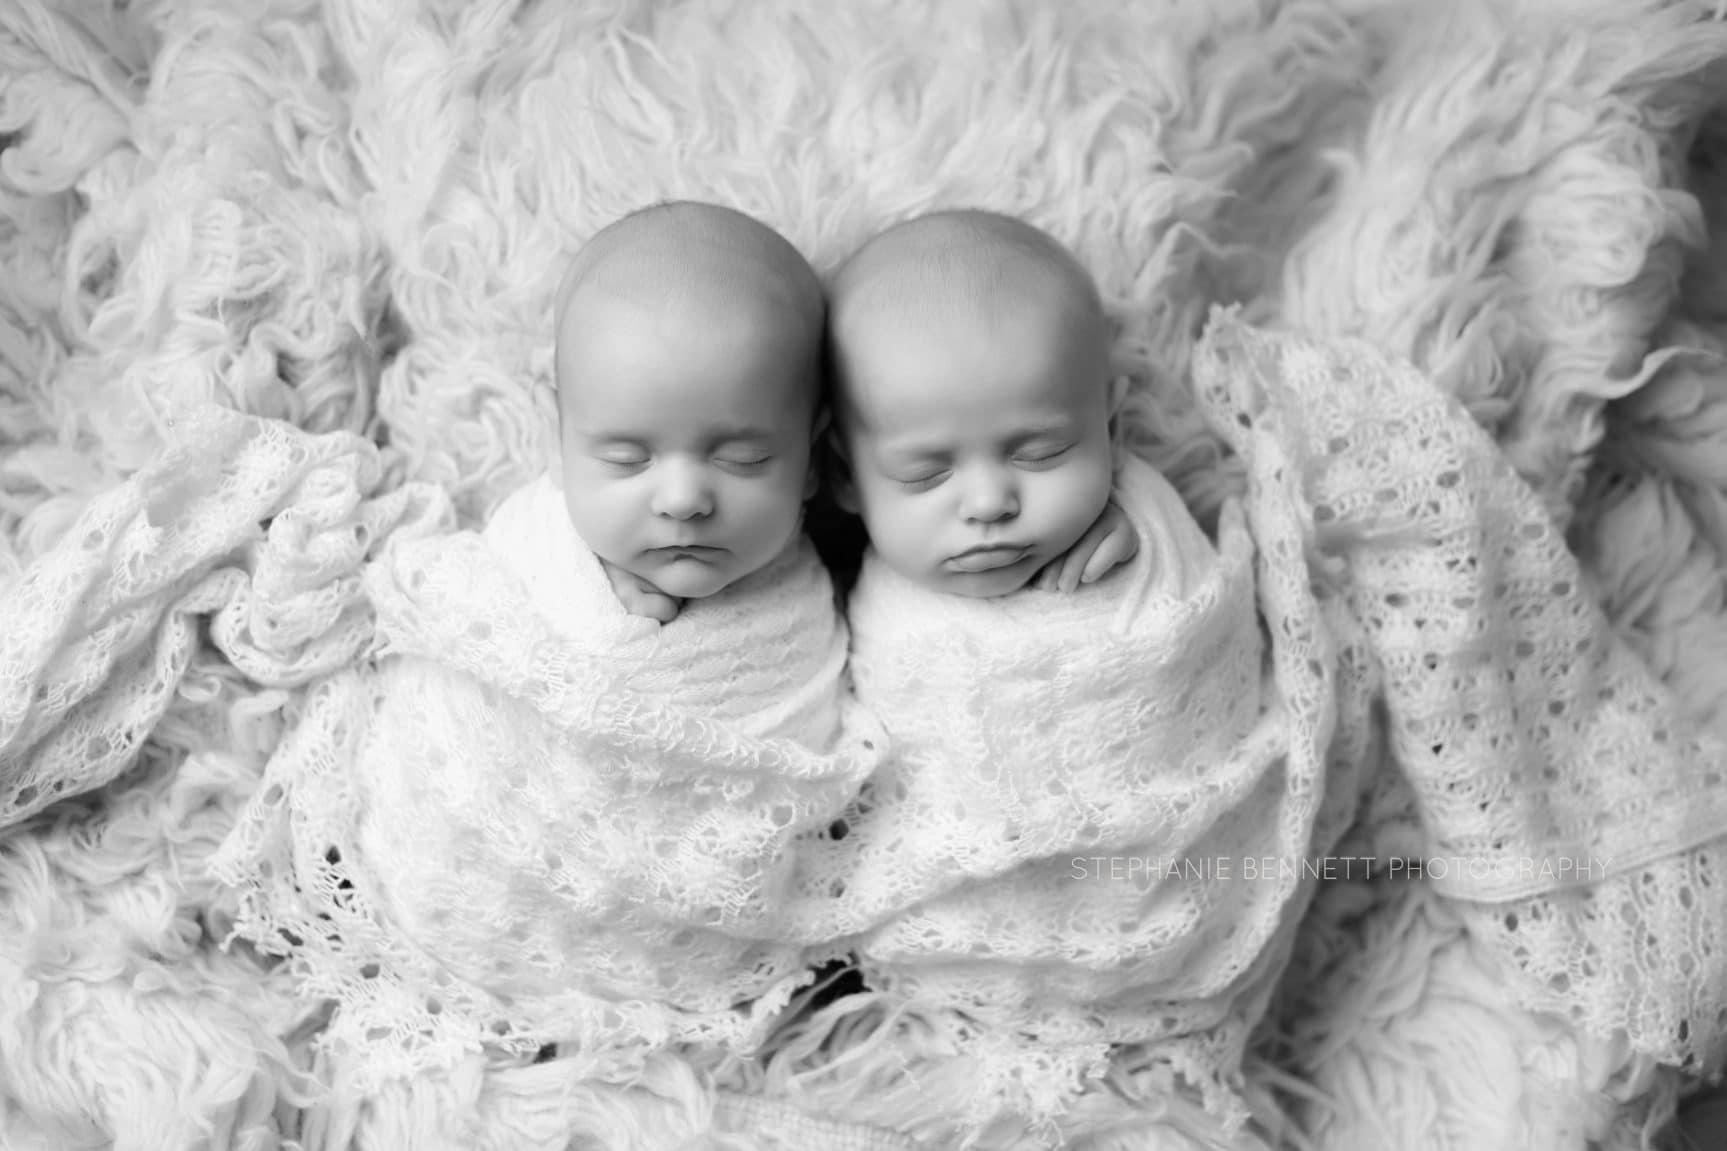 twin girl newborn photography session